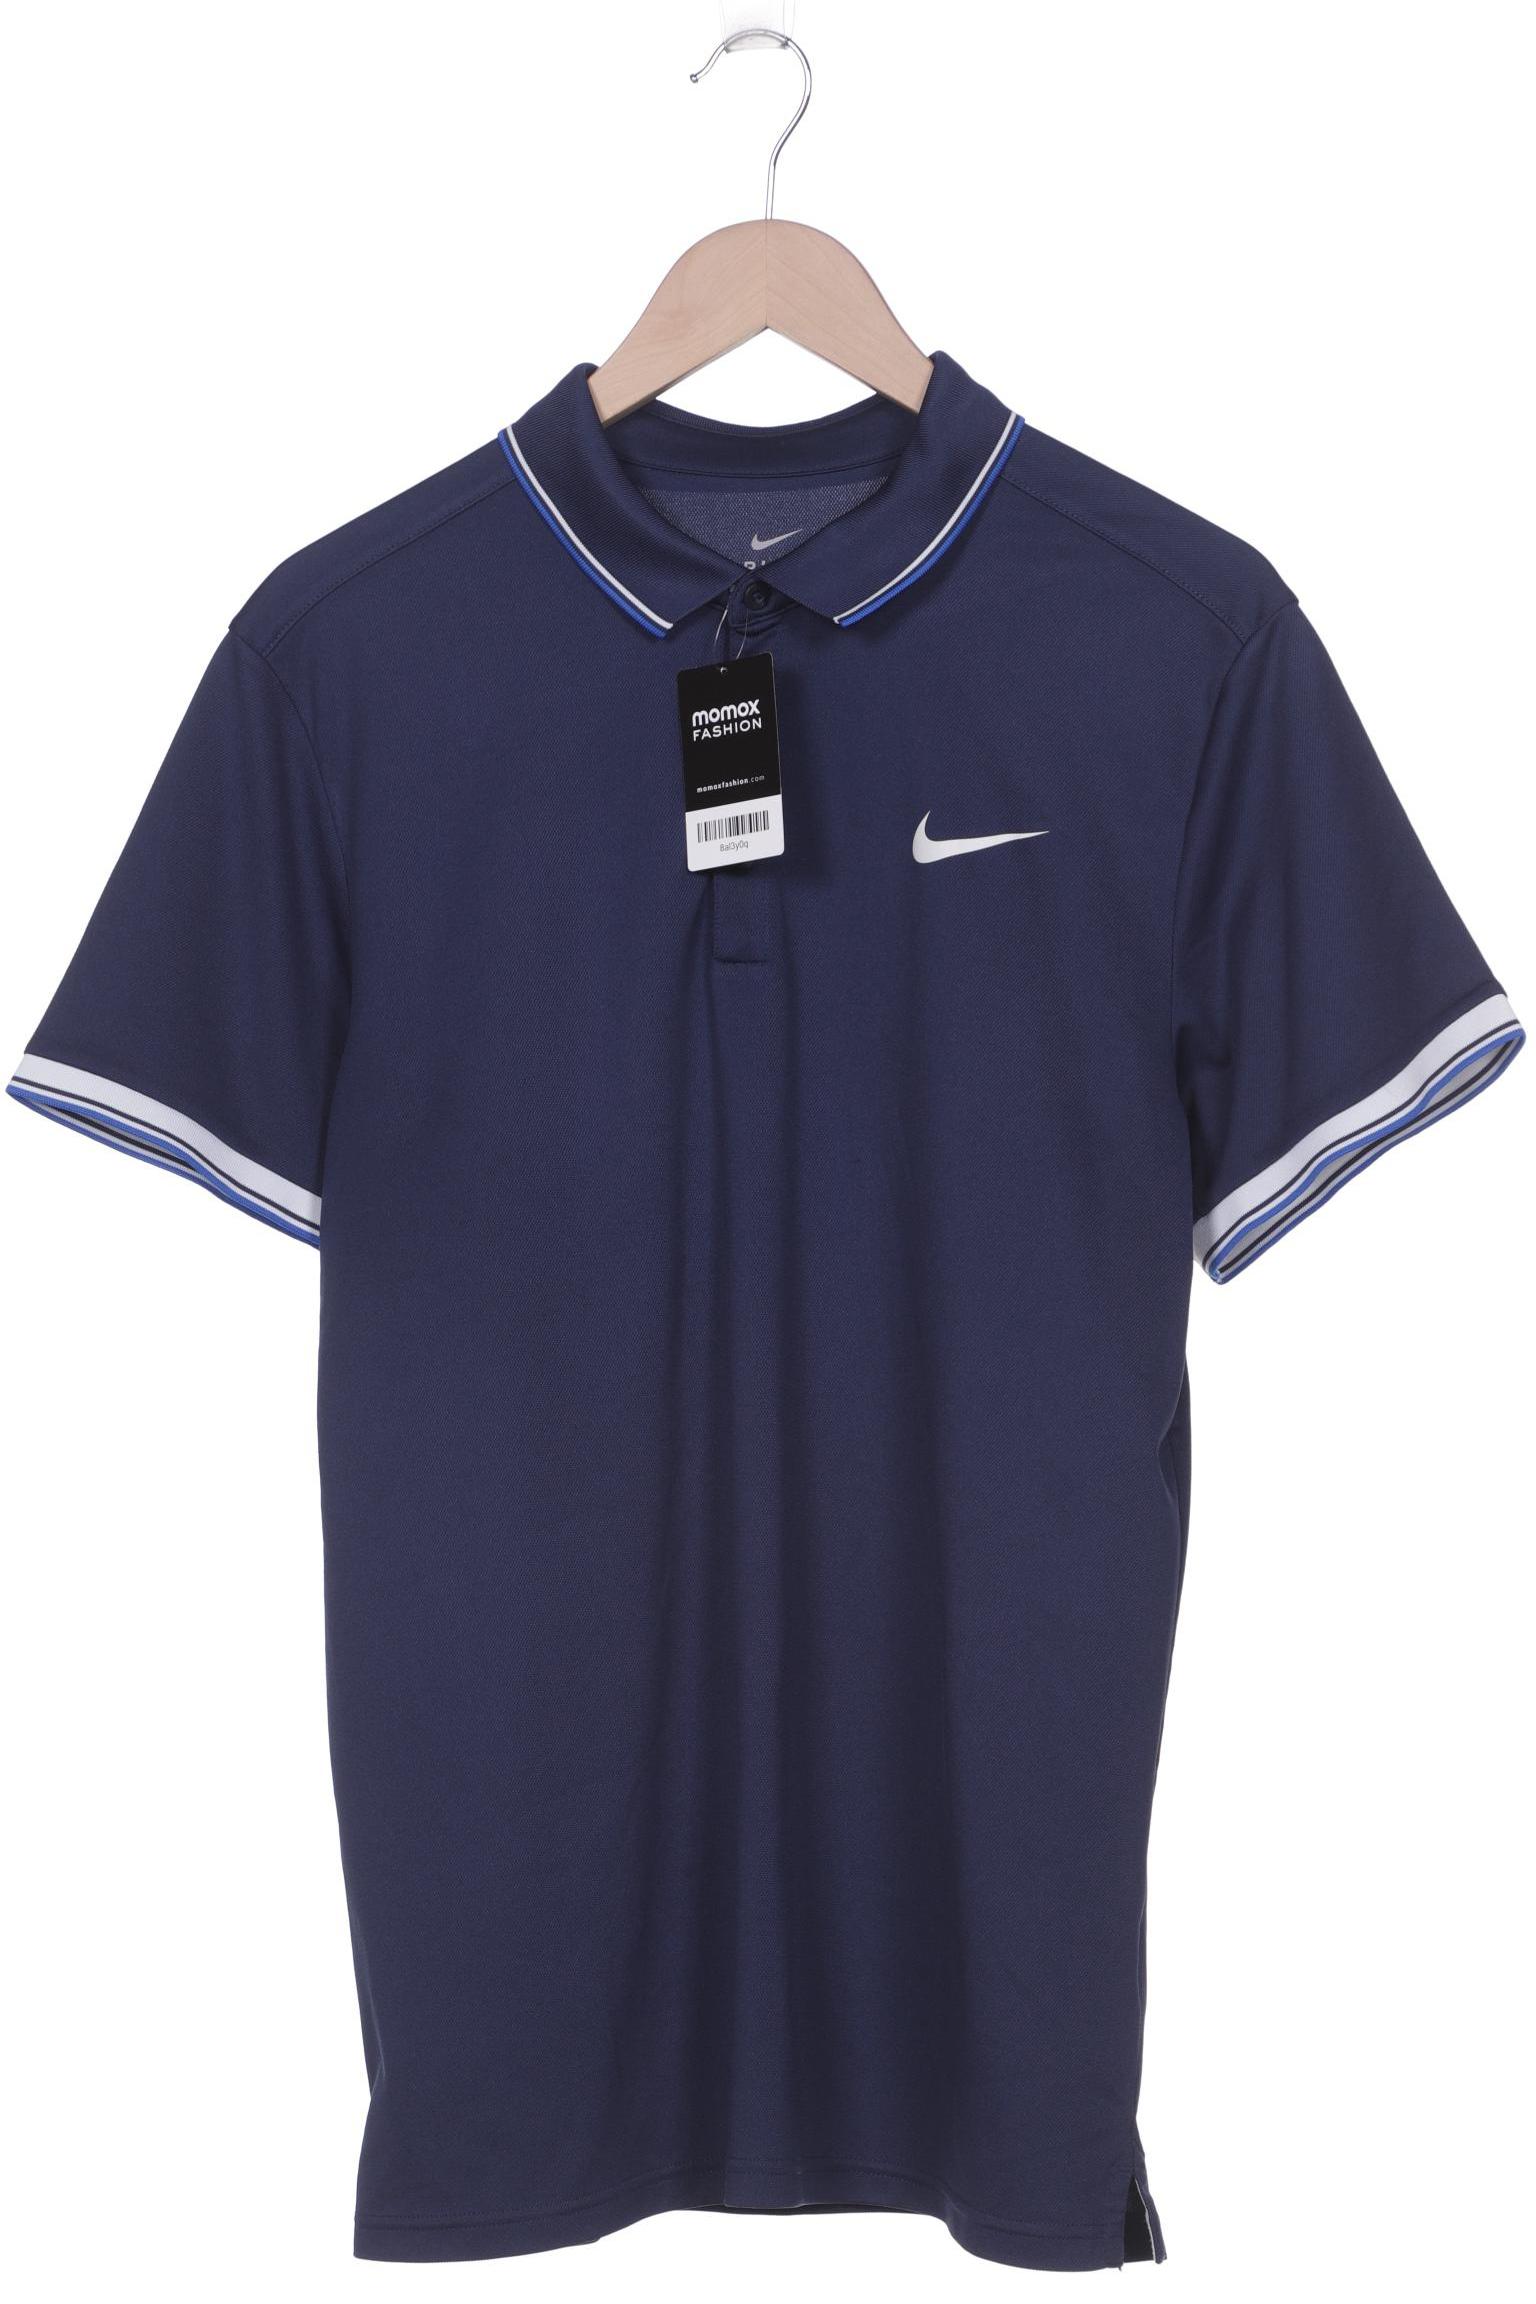 Nike Herren Poloshirt, marineblau, Gr. 52 von Nike